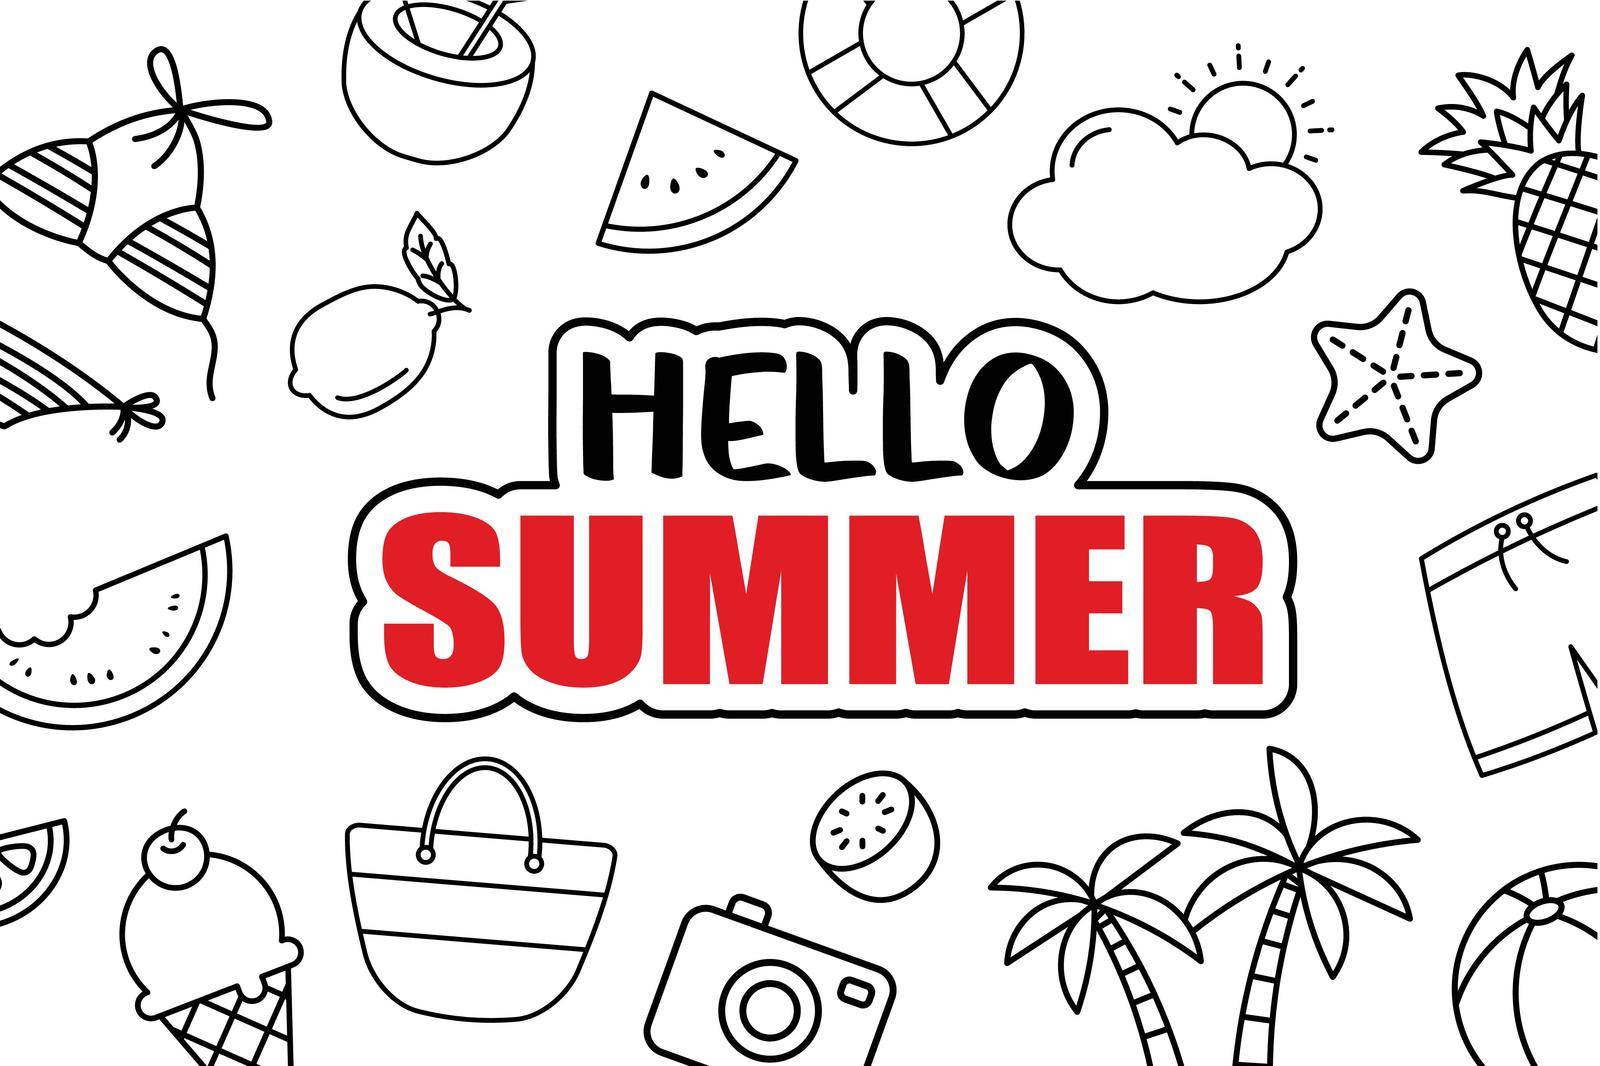 It's summer time background. Summer banner tropical elements design.